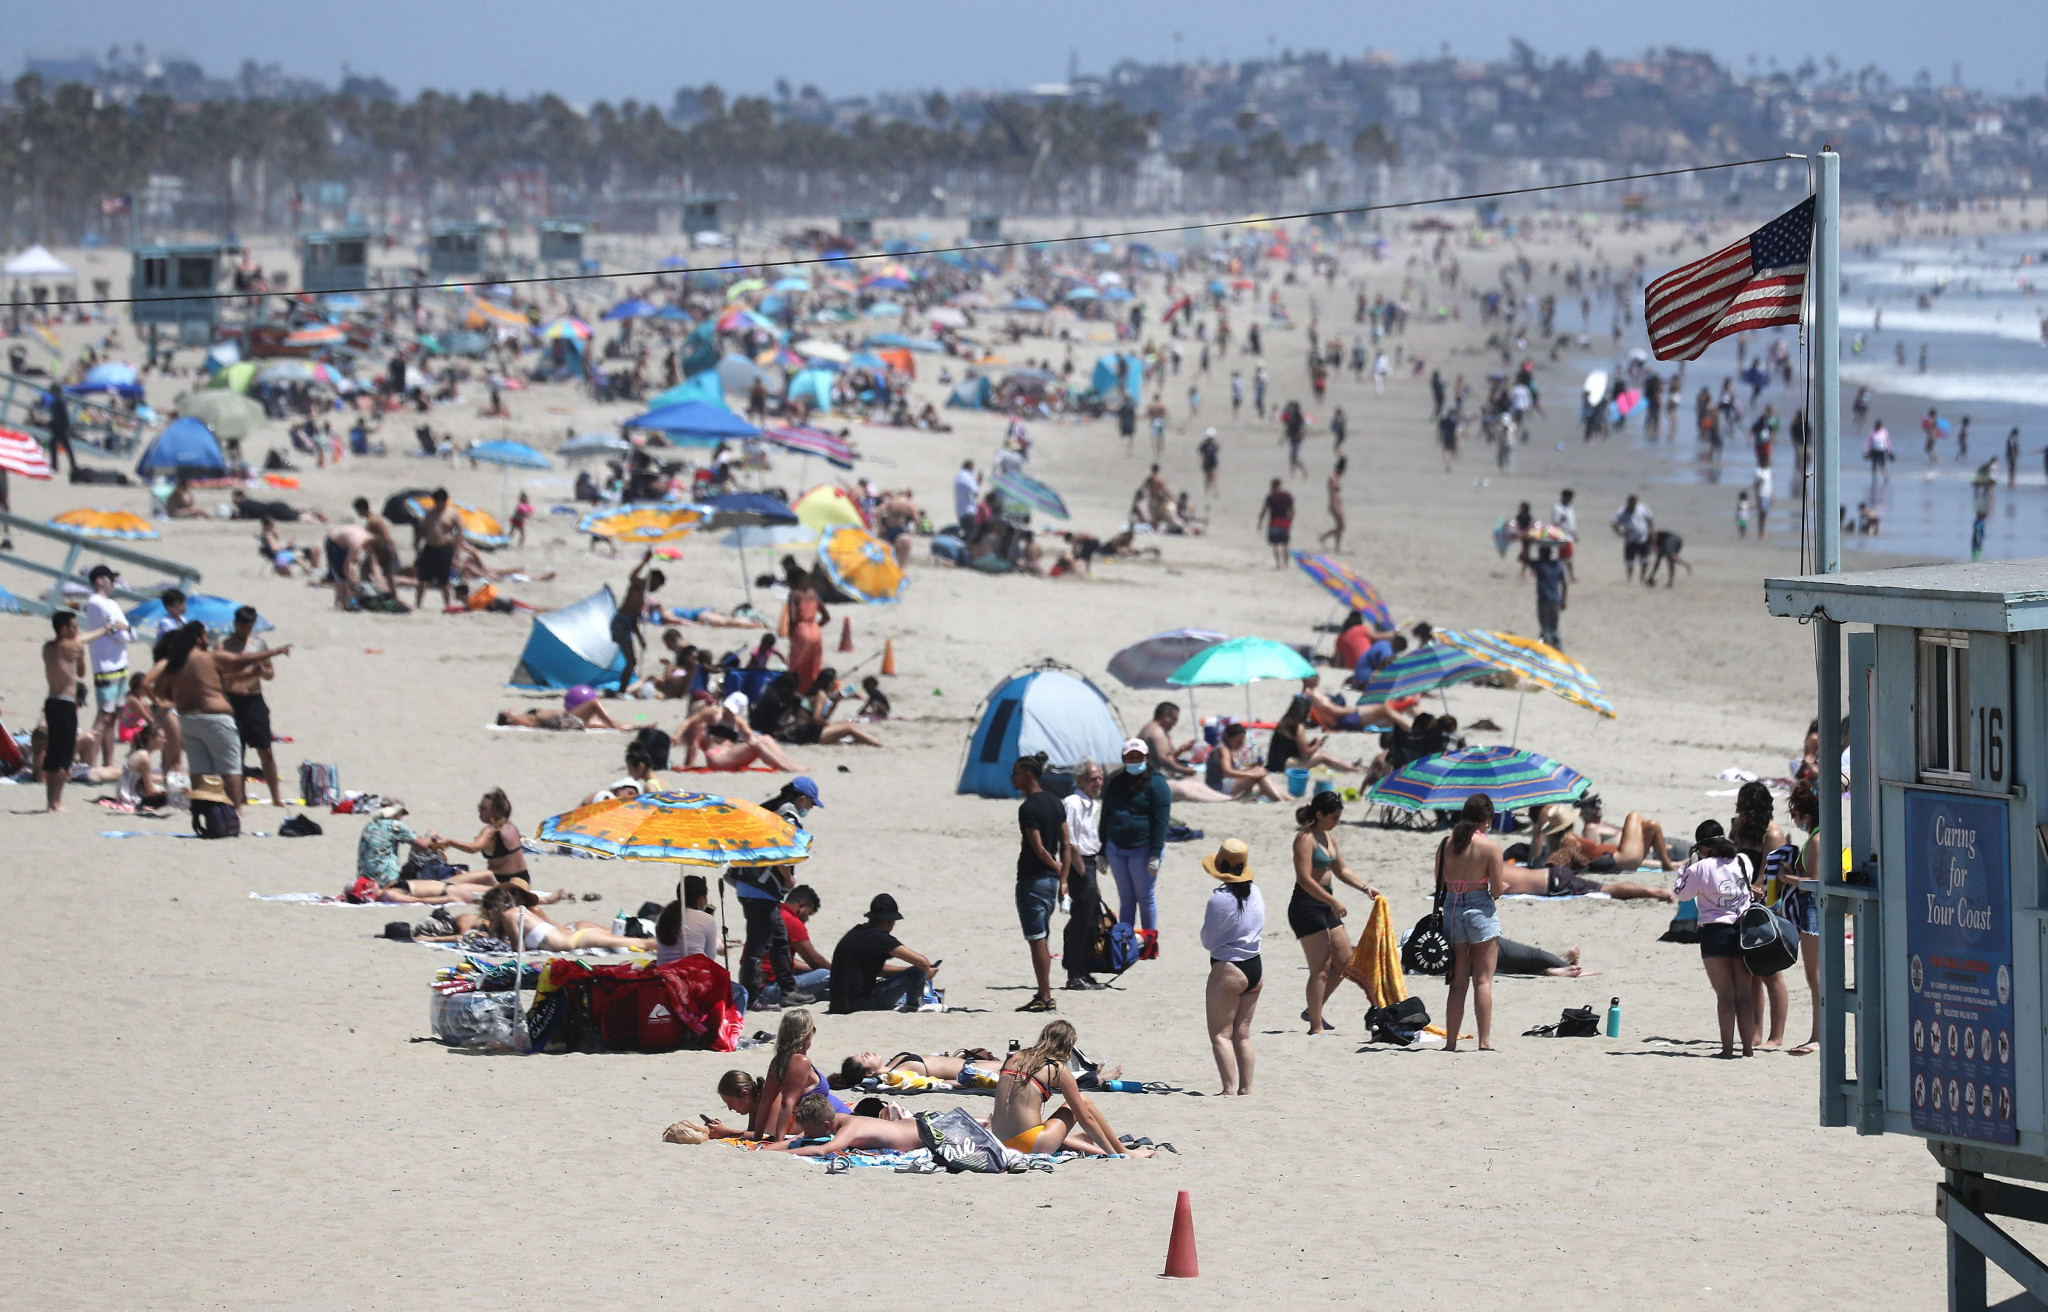 Santa Monica announces preliminary construction plan as part of Los Angeles 2028 Olympics preparations